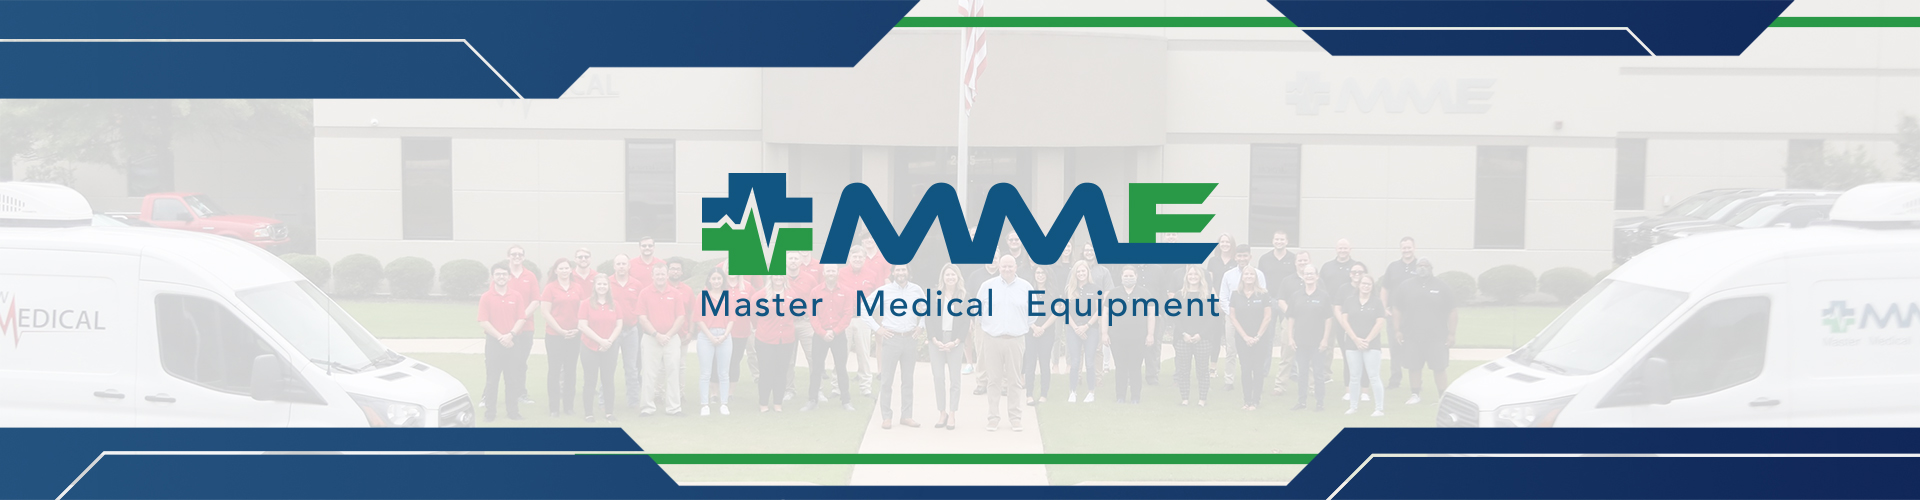 Case Study - Master Medical Equipment